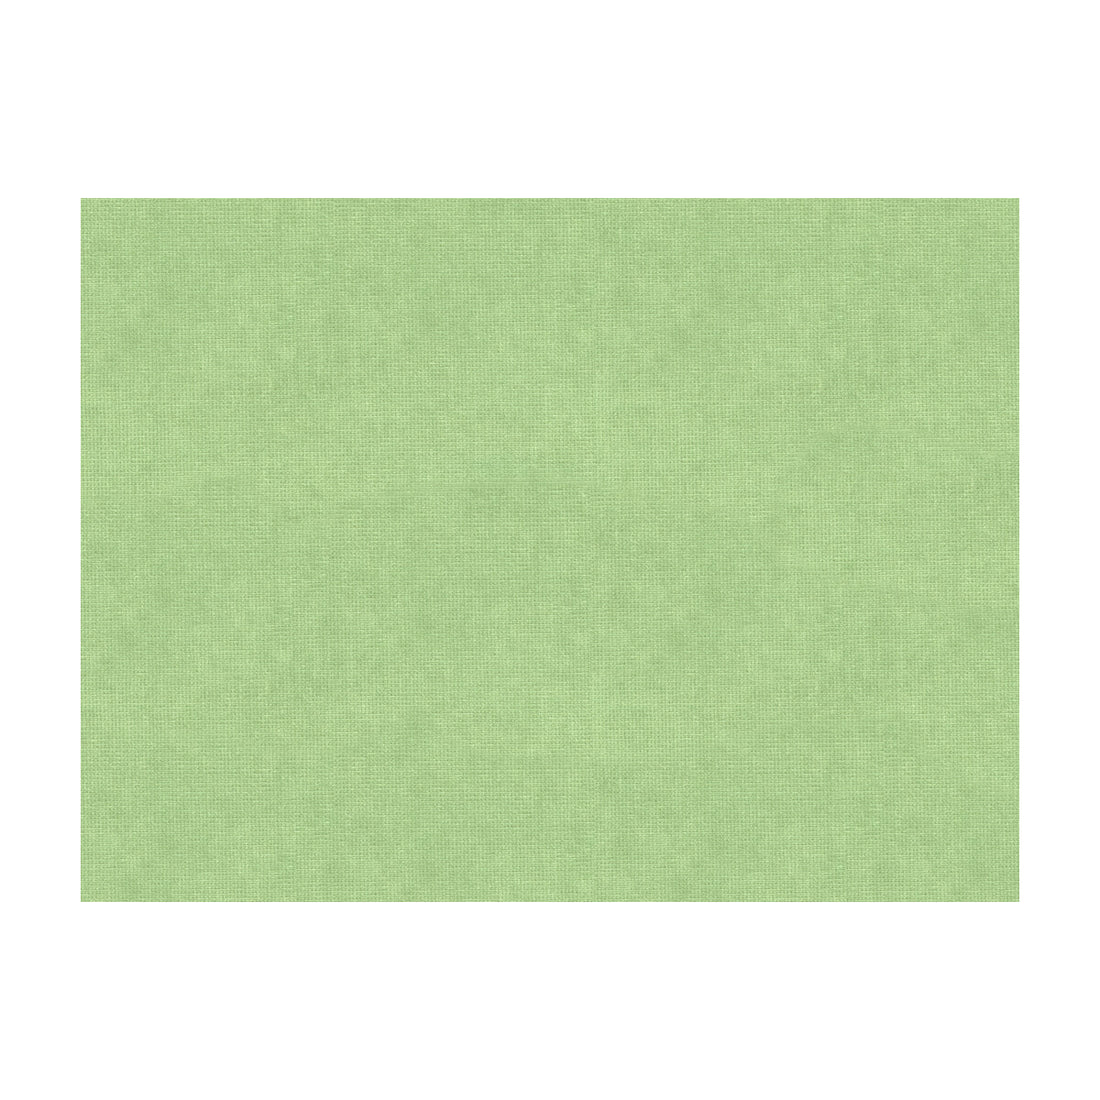 Charmant Velvet fabric in celadon color - pattern 8013150.23.0 - by Brunschwig &amp; Fils